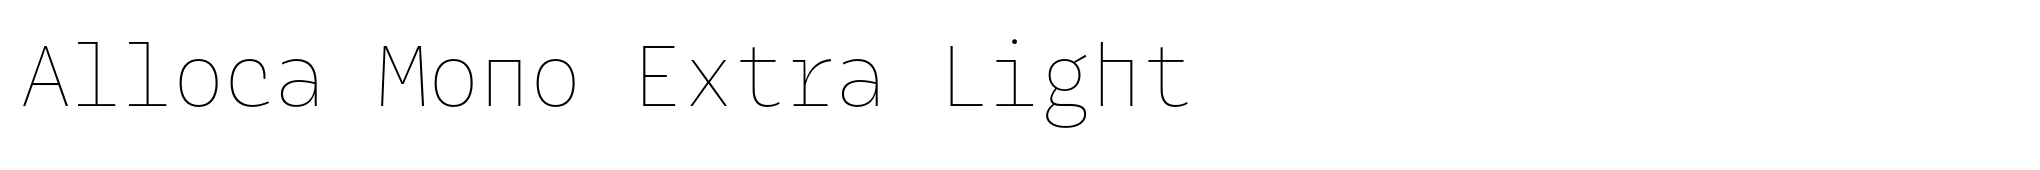 Alloca Mono Extra Light image